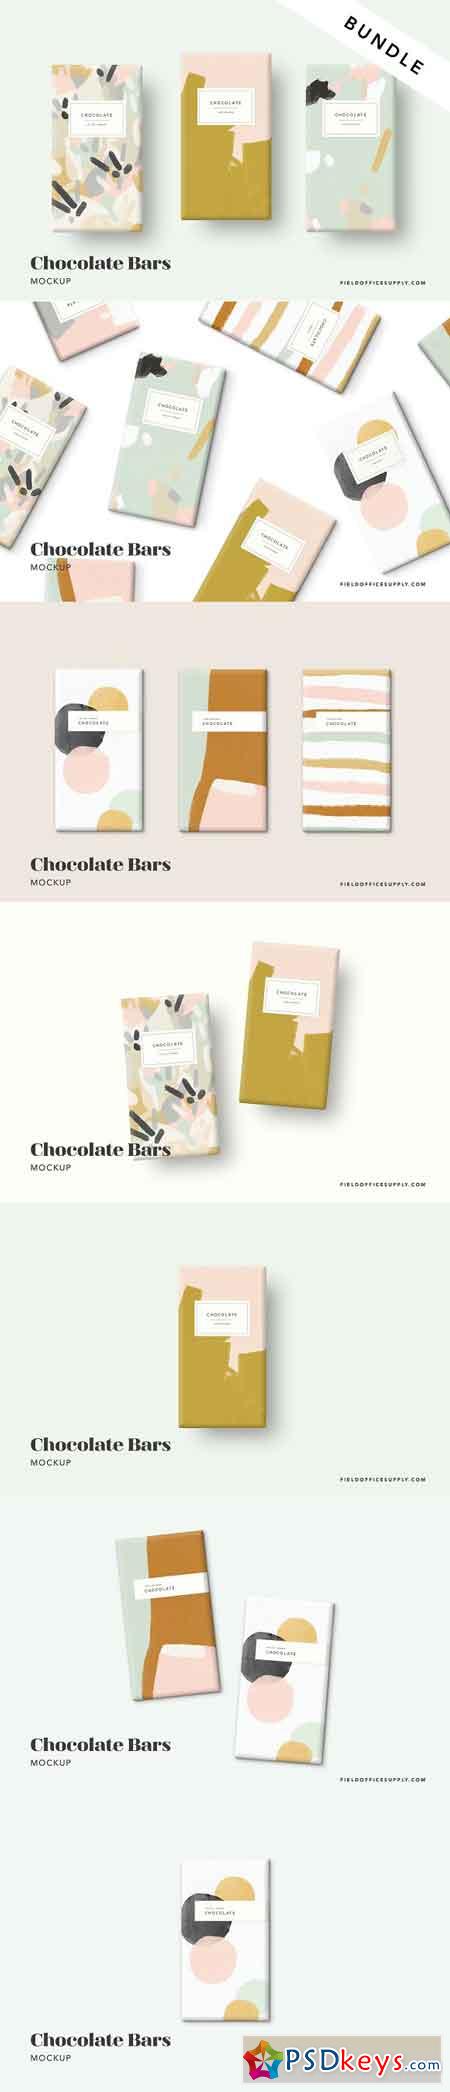 Chocolate Bar Mockup Bundle 2775583